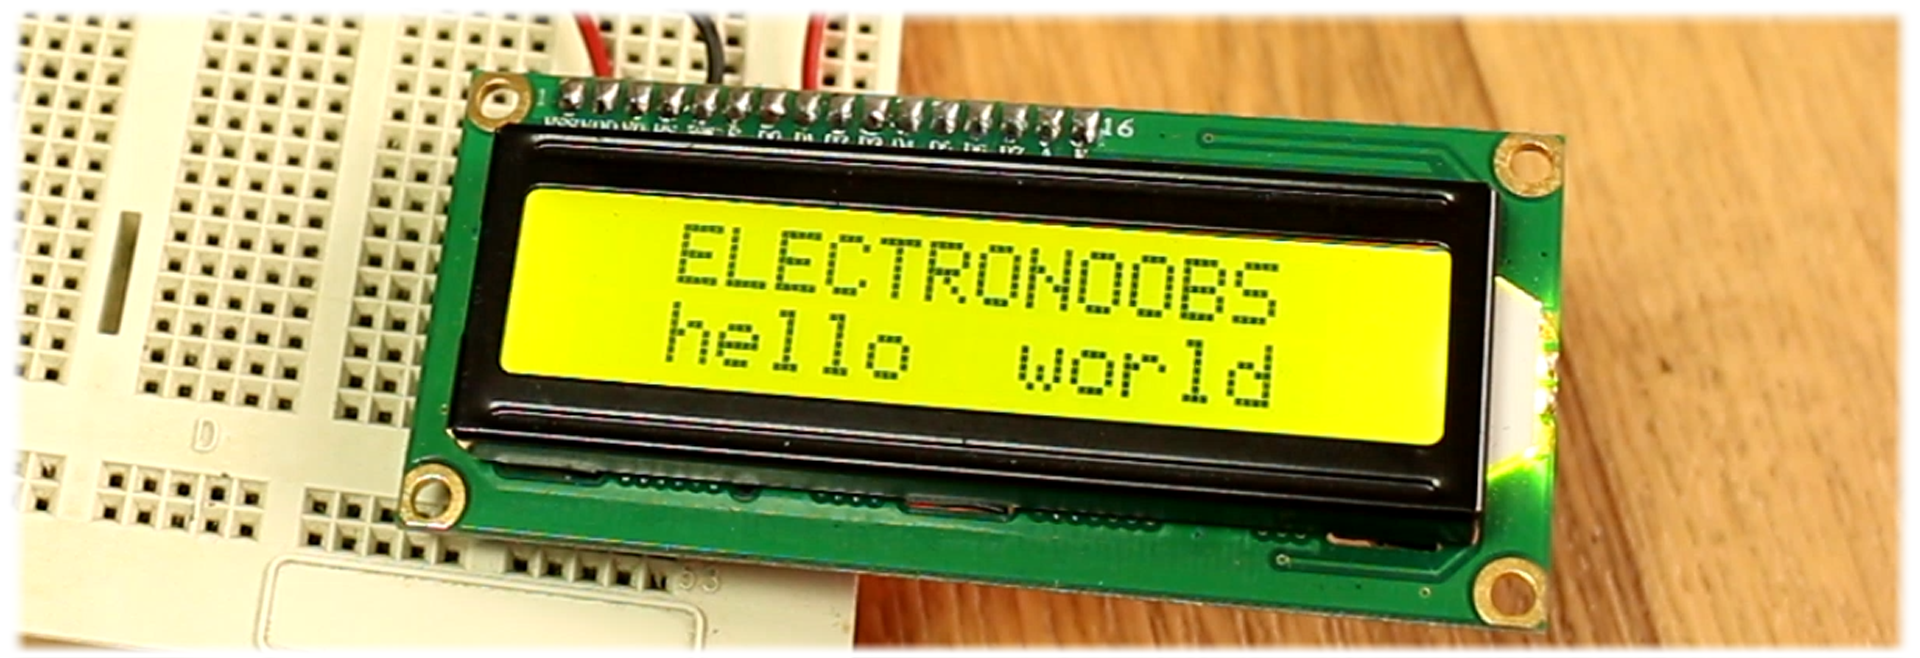 i2c LCD arduino